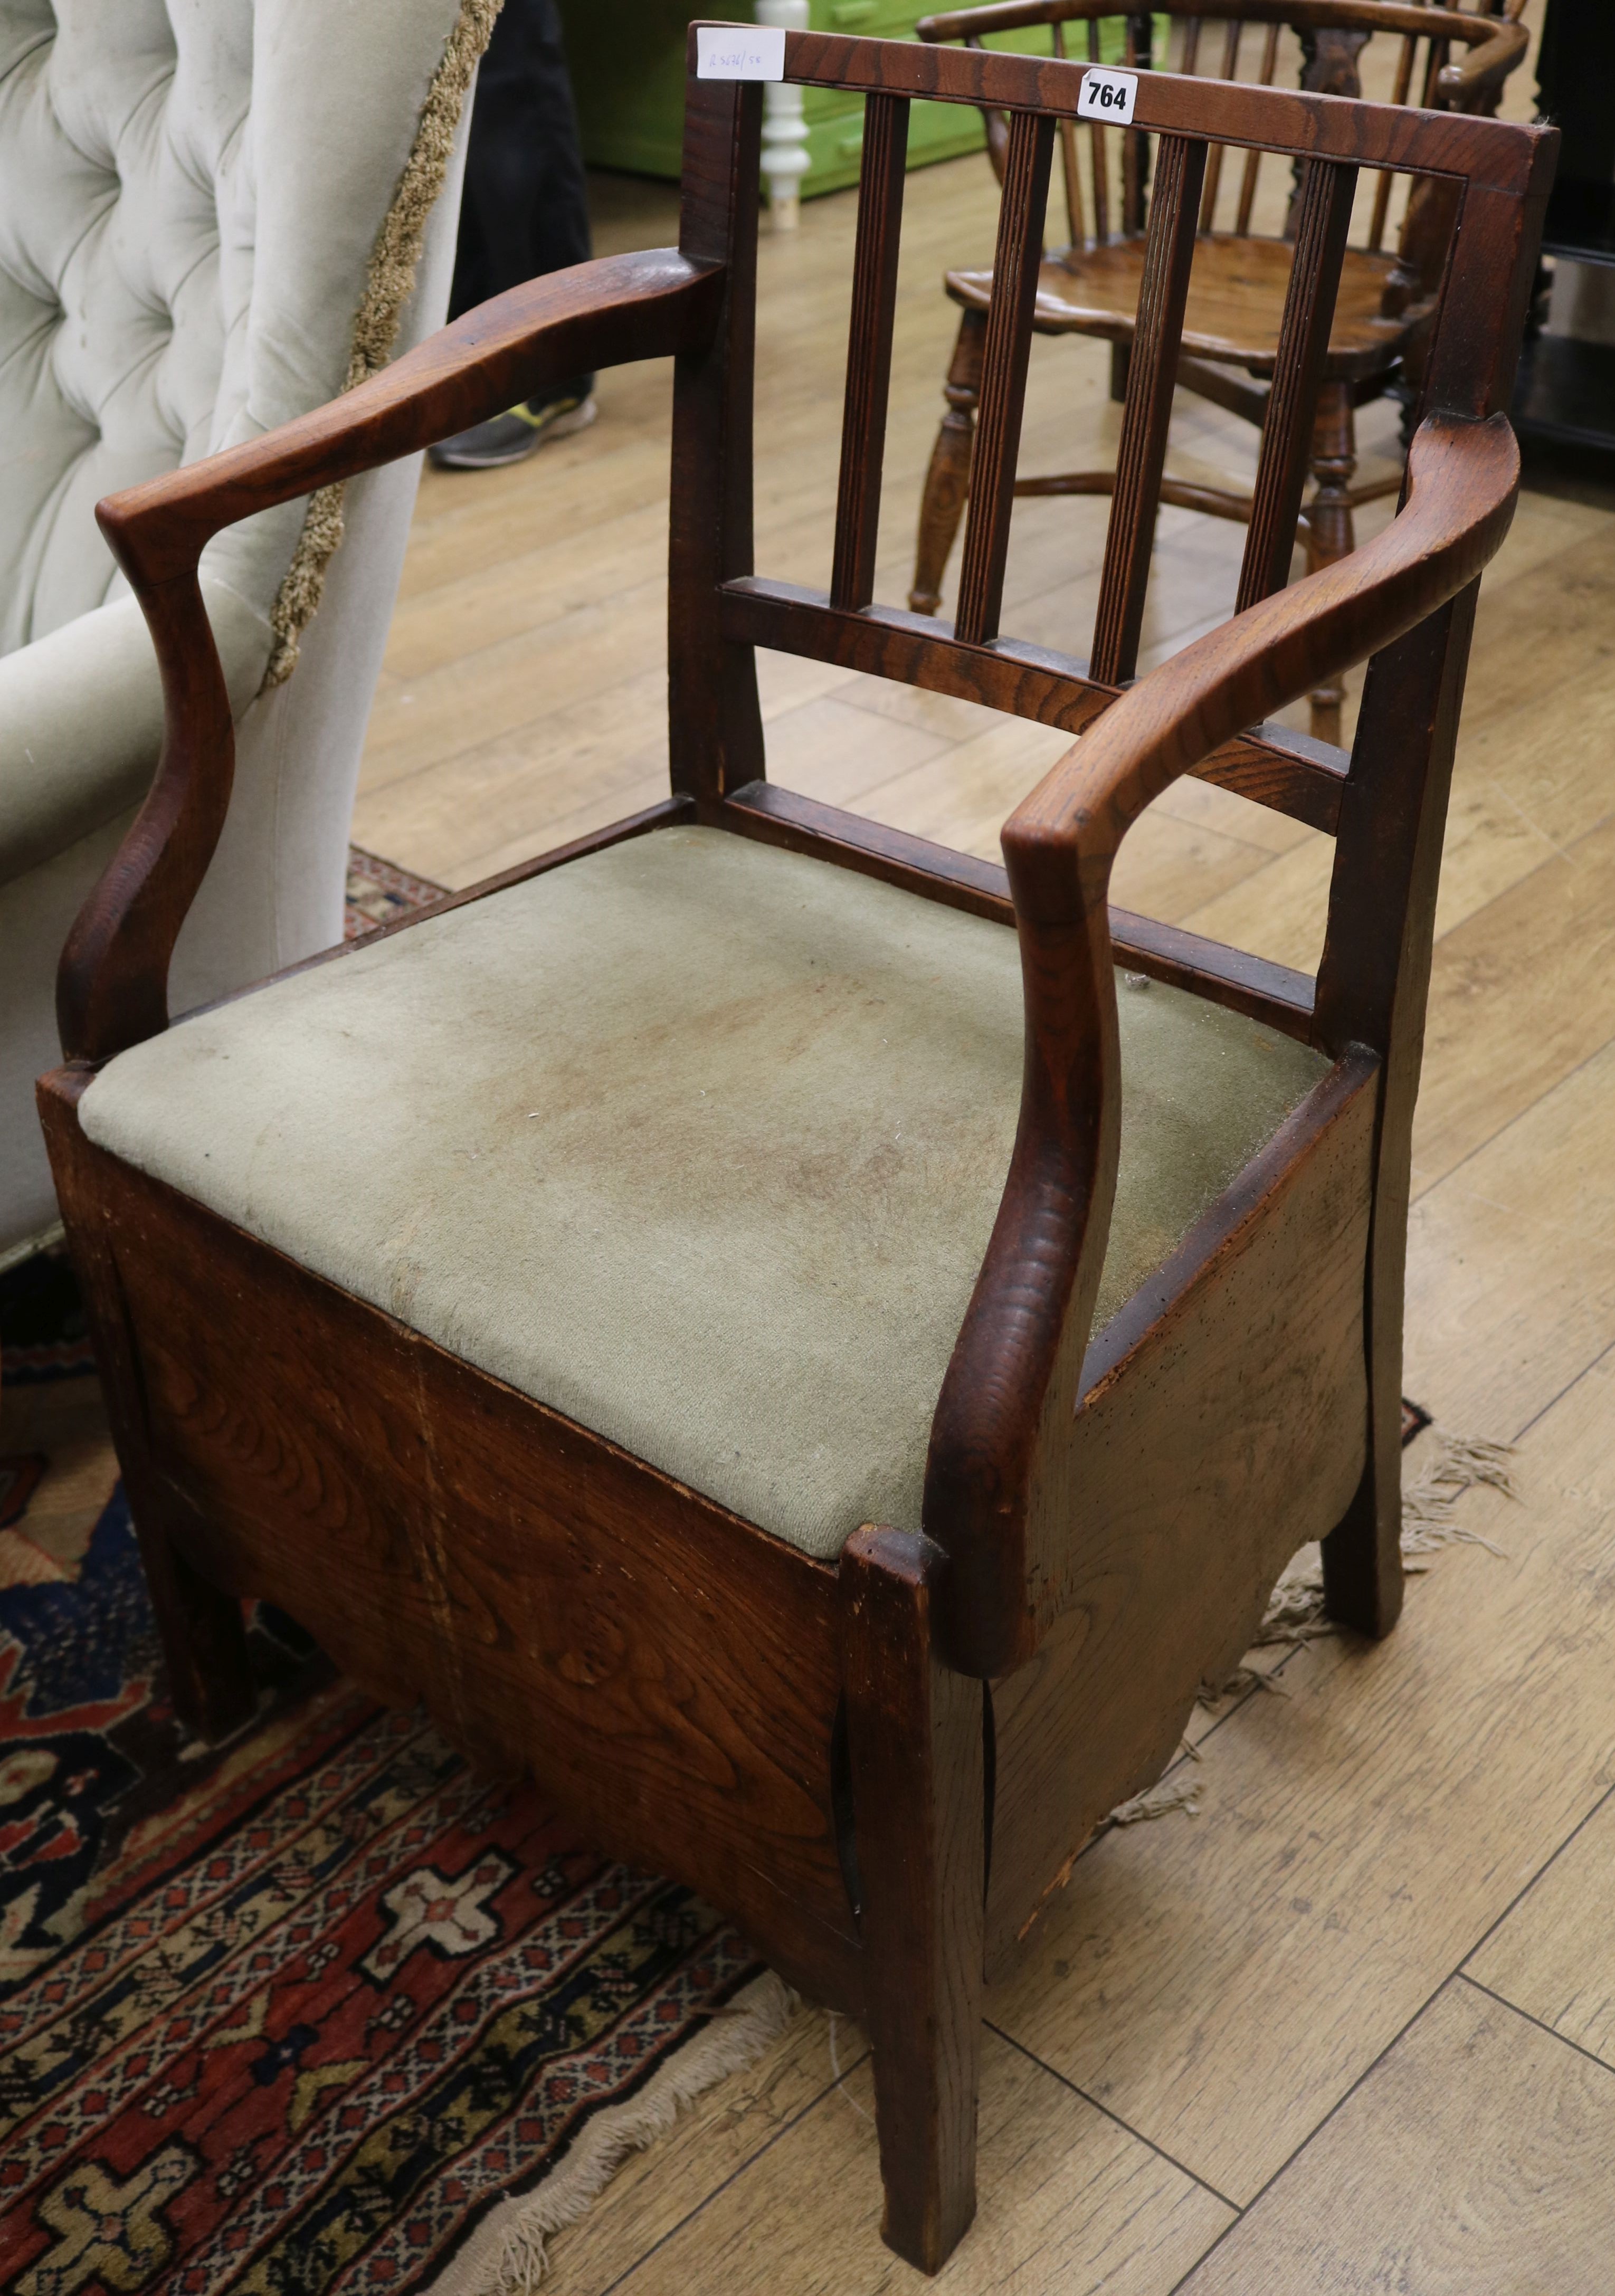 A Regency elm commode chair